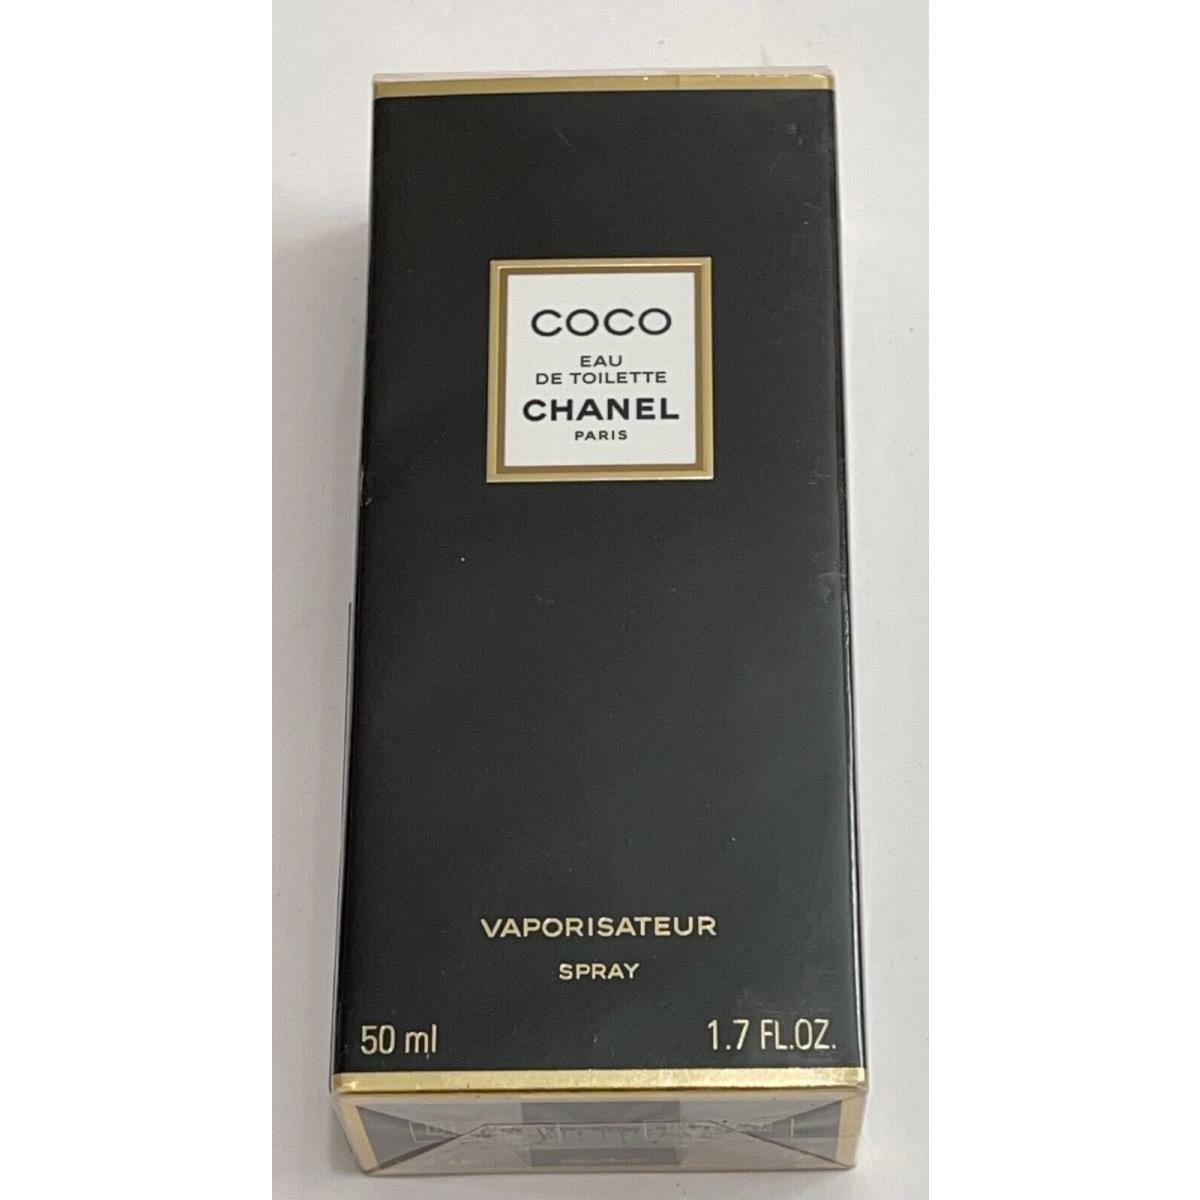 Chanel Coco Eau De Toilette 1.7 fl oz / 50 ml Spray